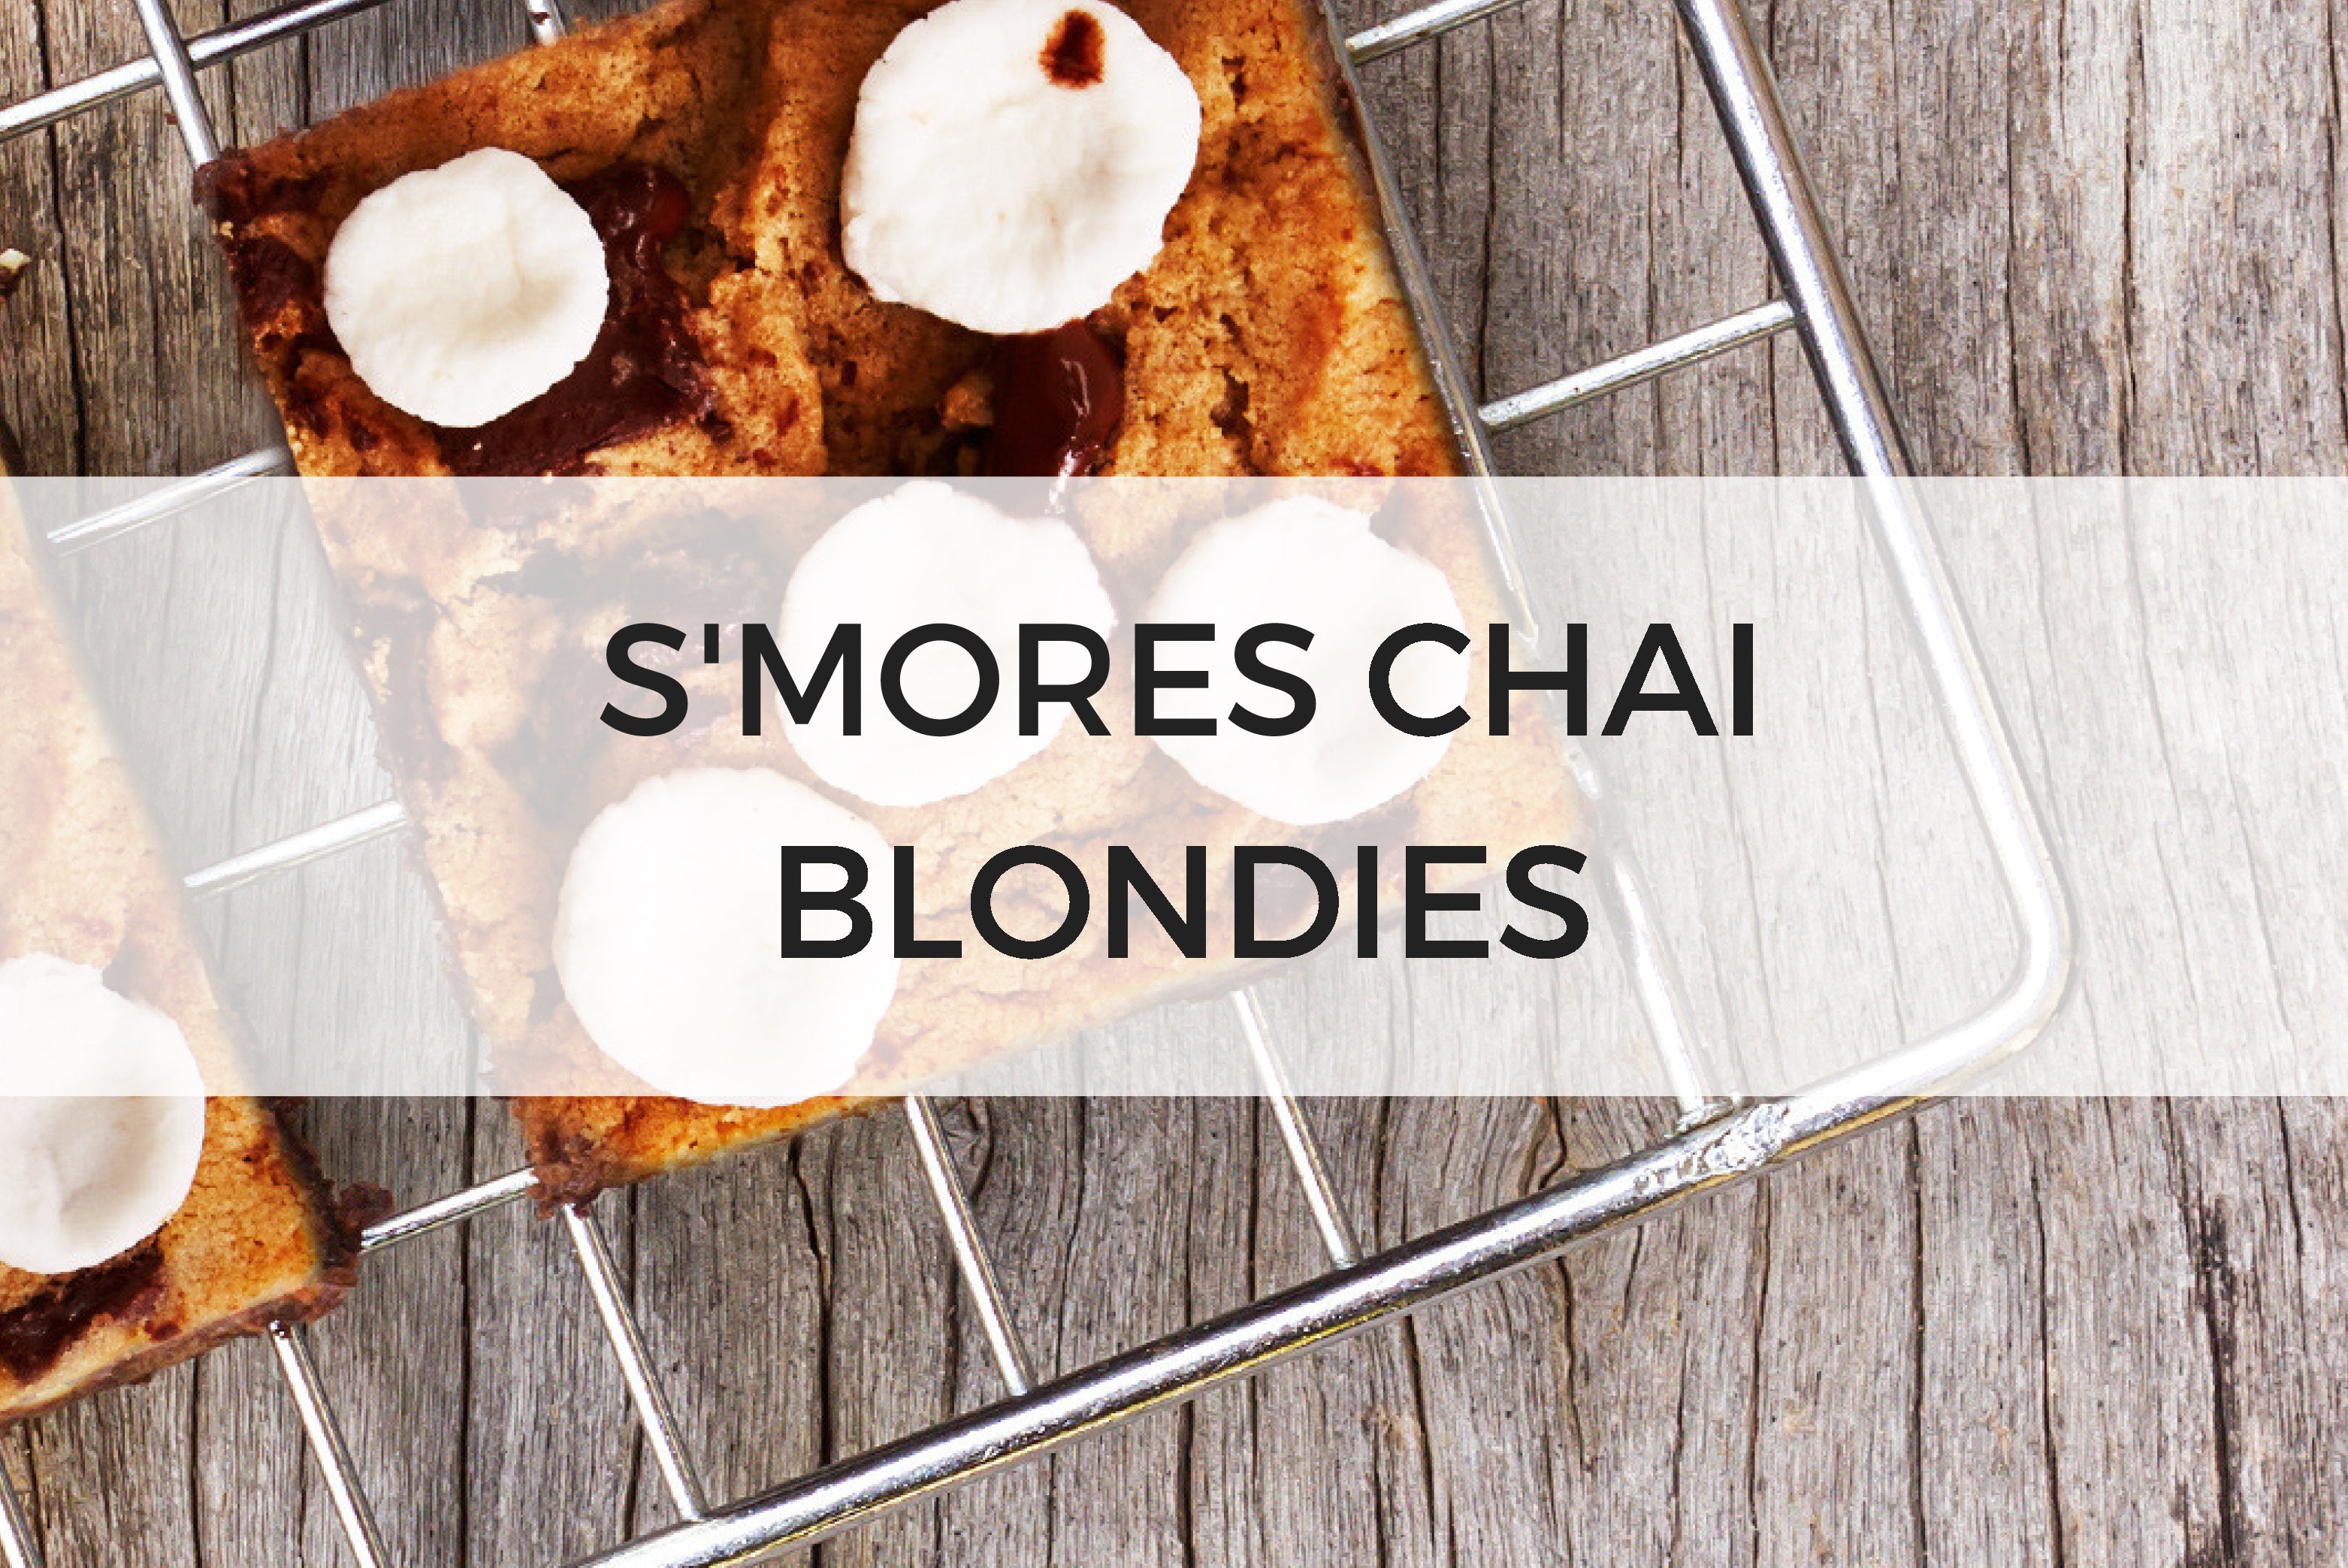 Smores Chai Blondies